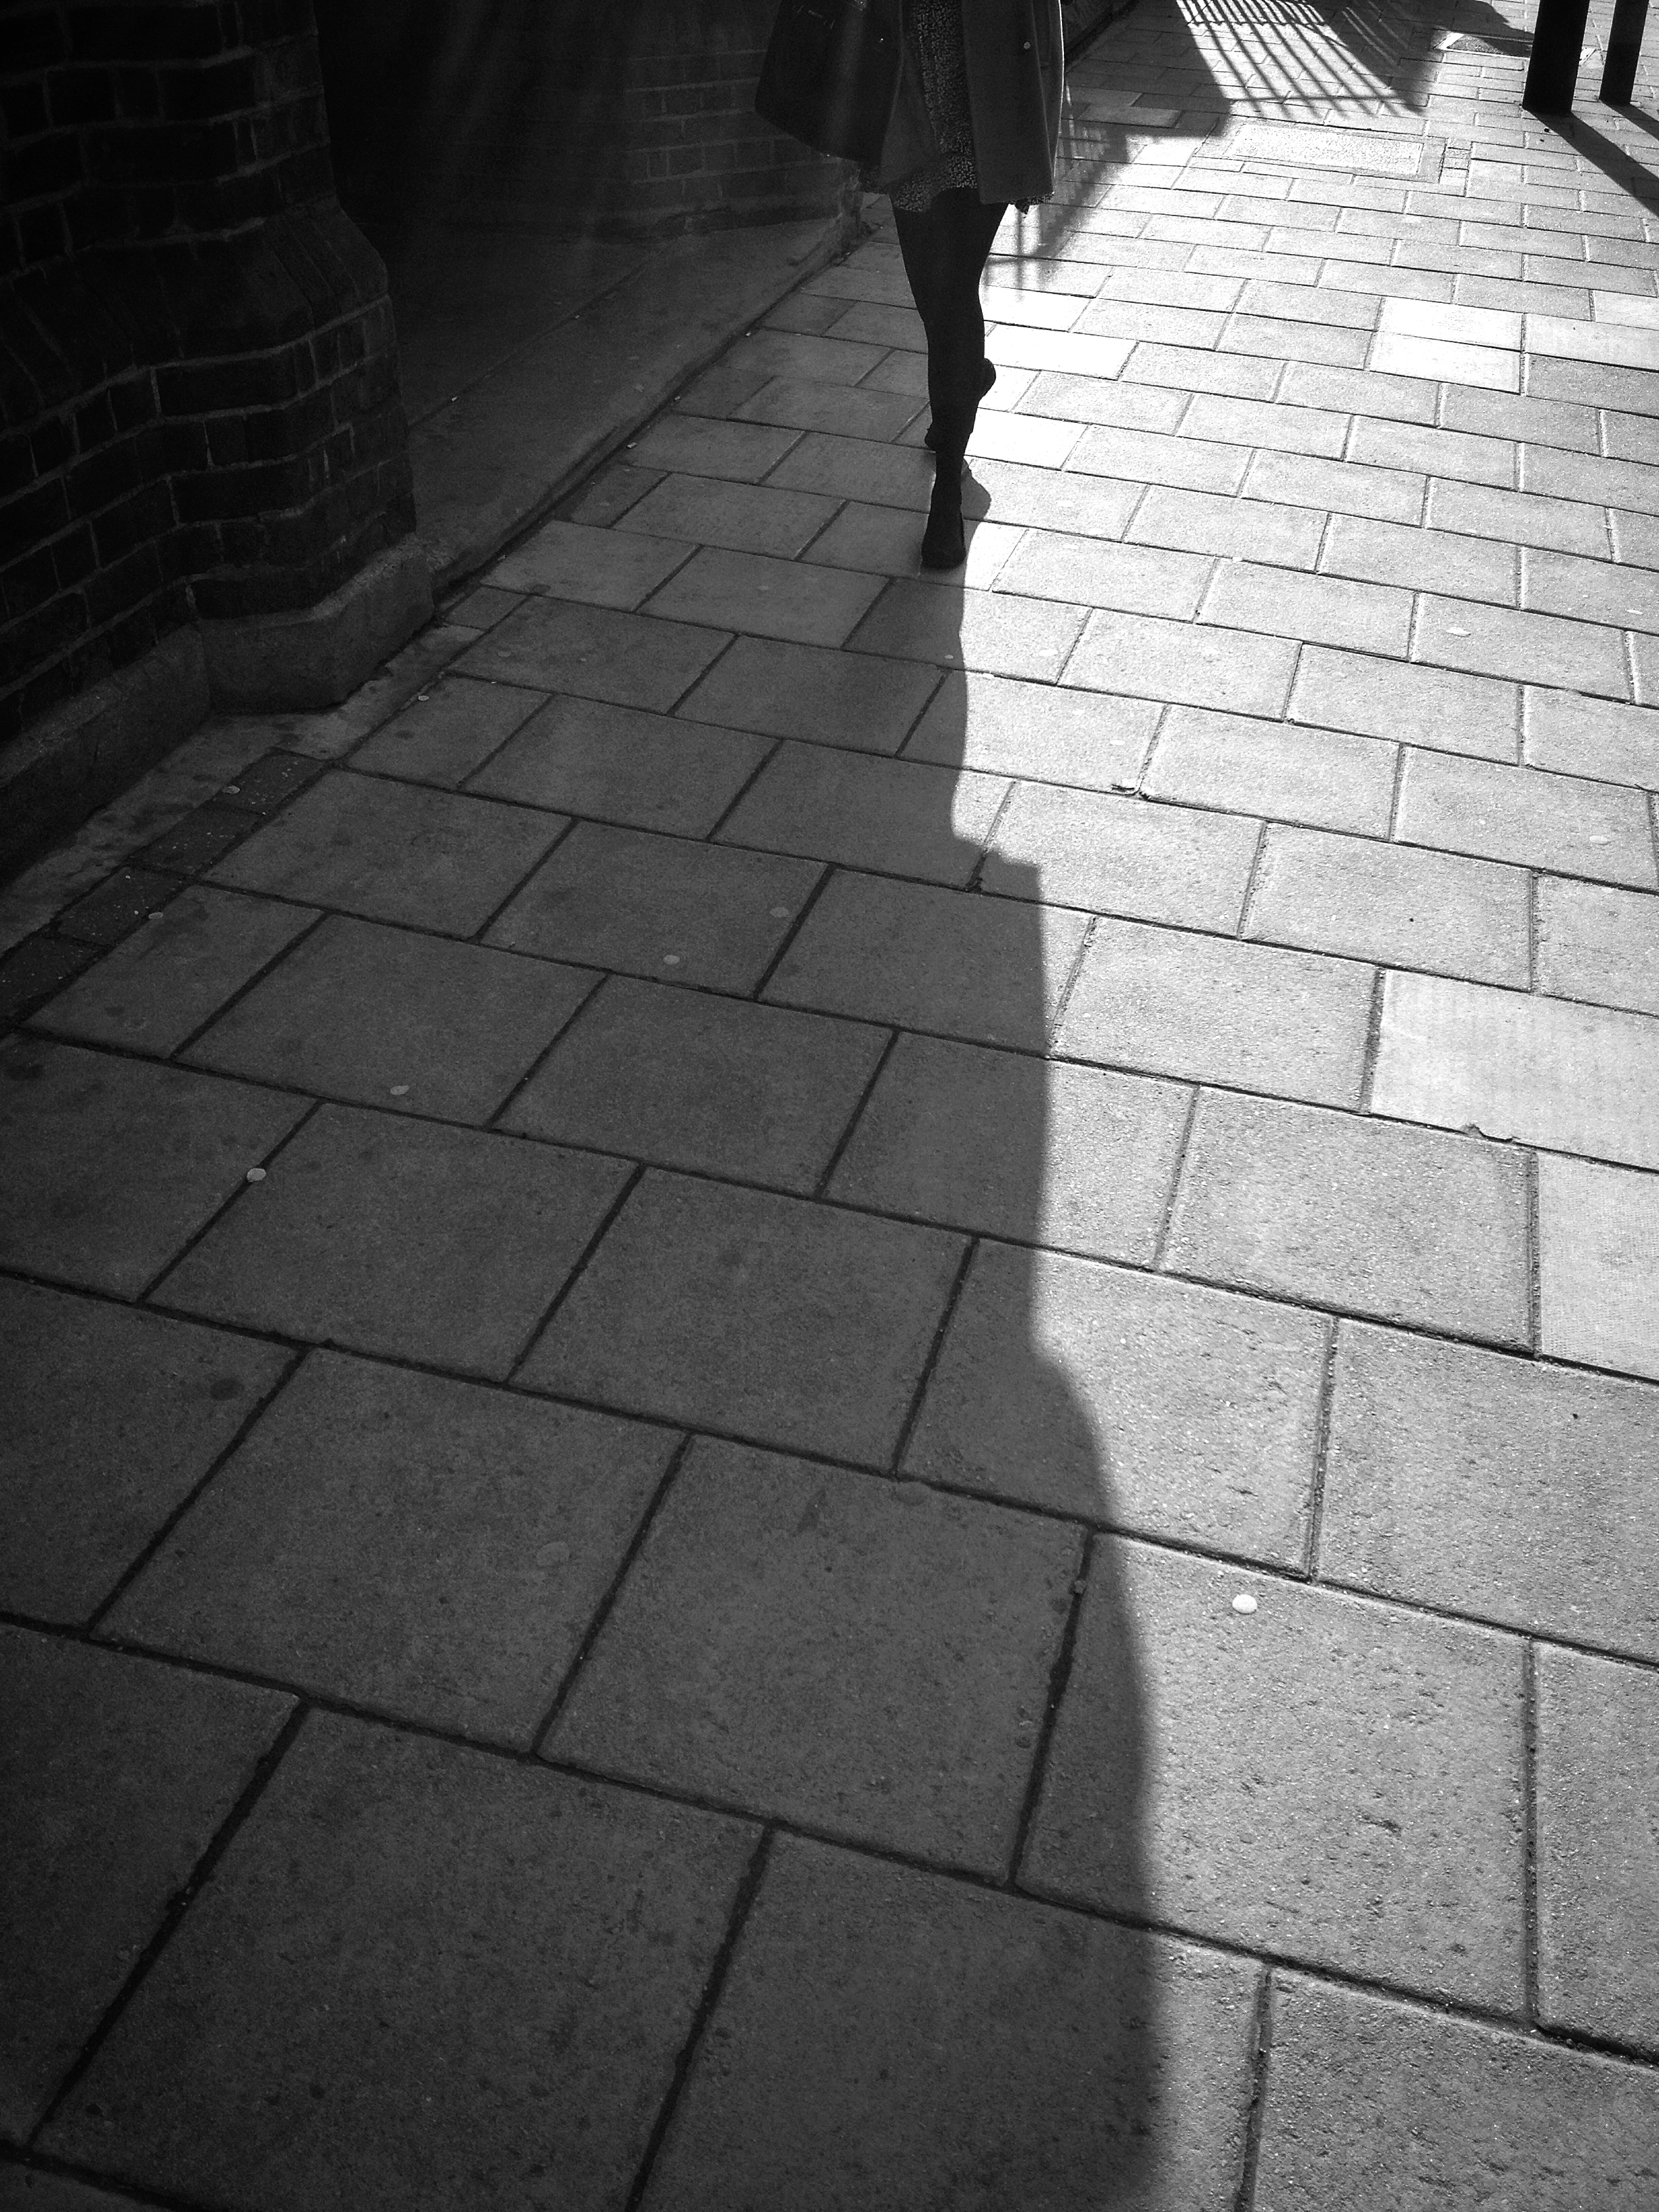 shadow-dancer-janbernet-photography.JPG